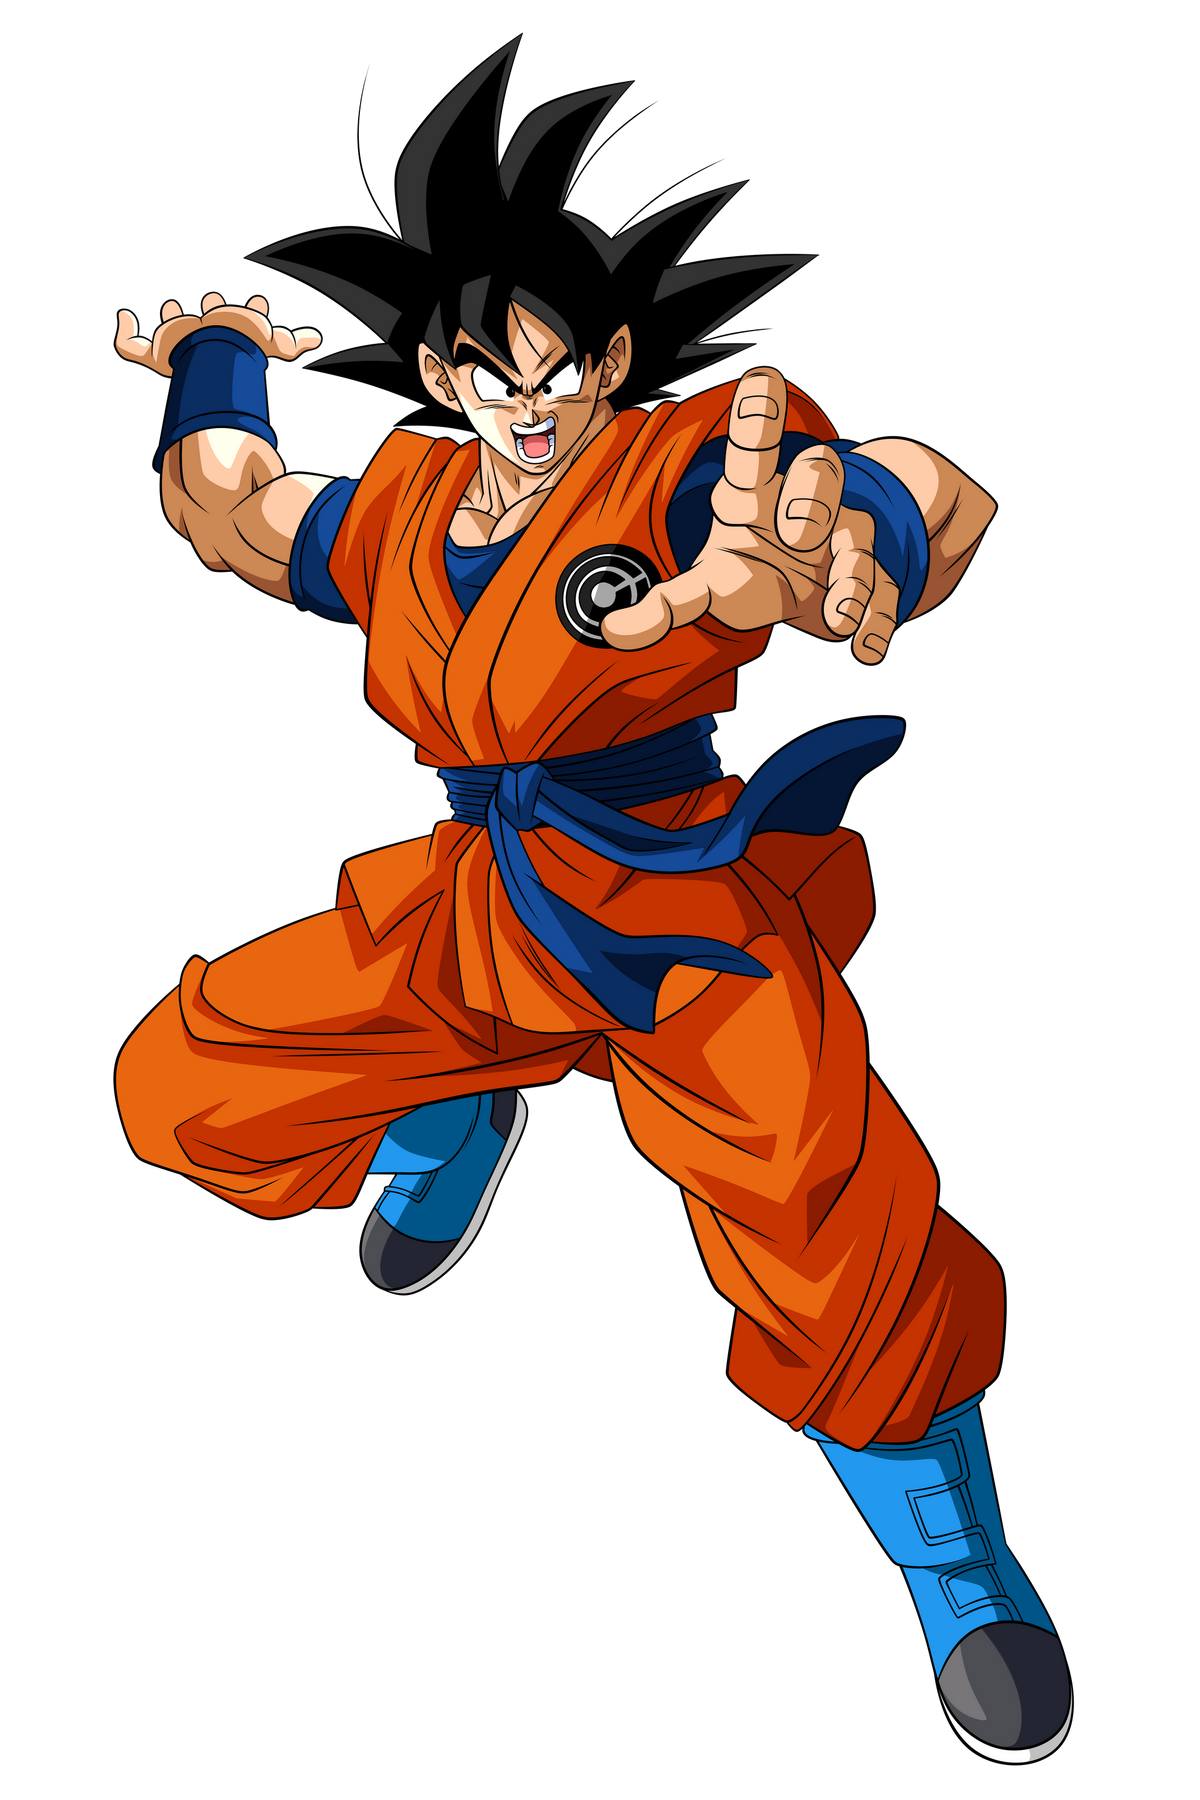 Drip Goku Vs Cc Goku, Who Is Strongest